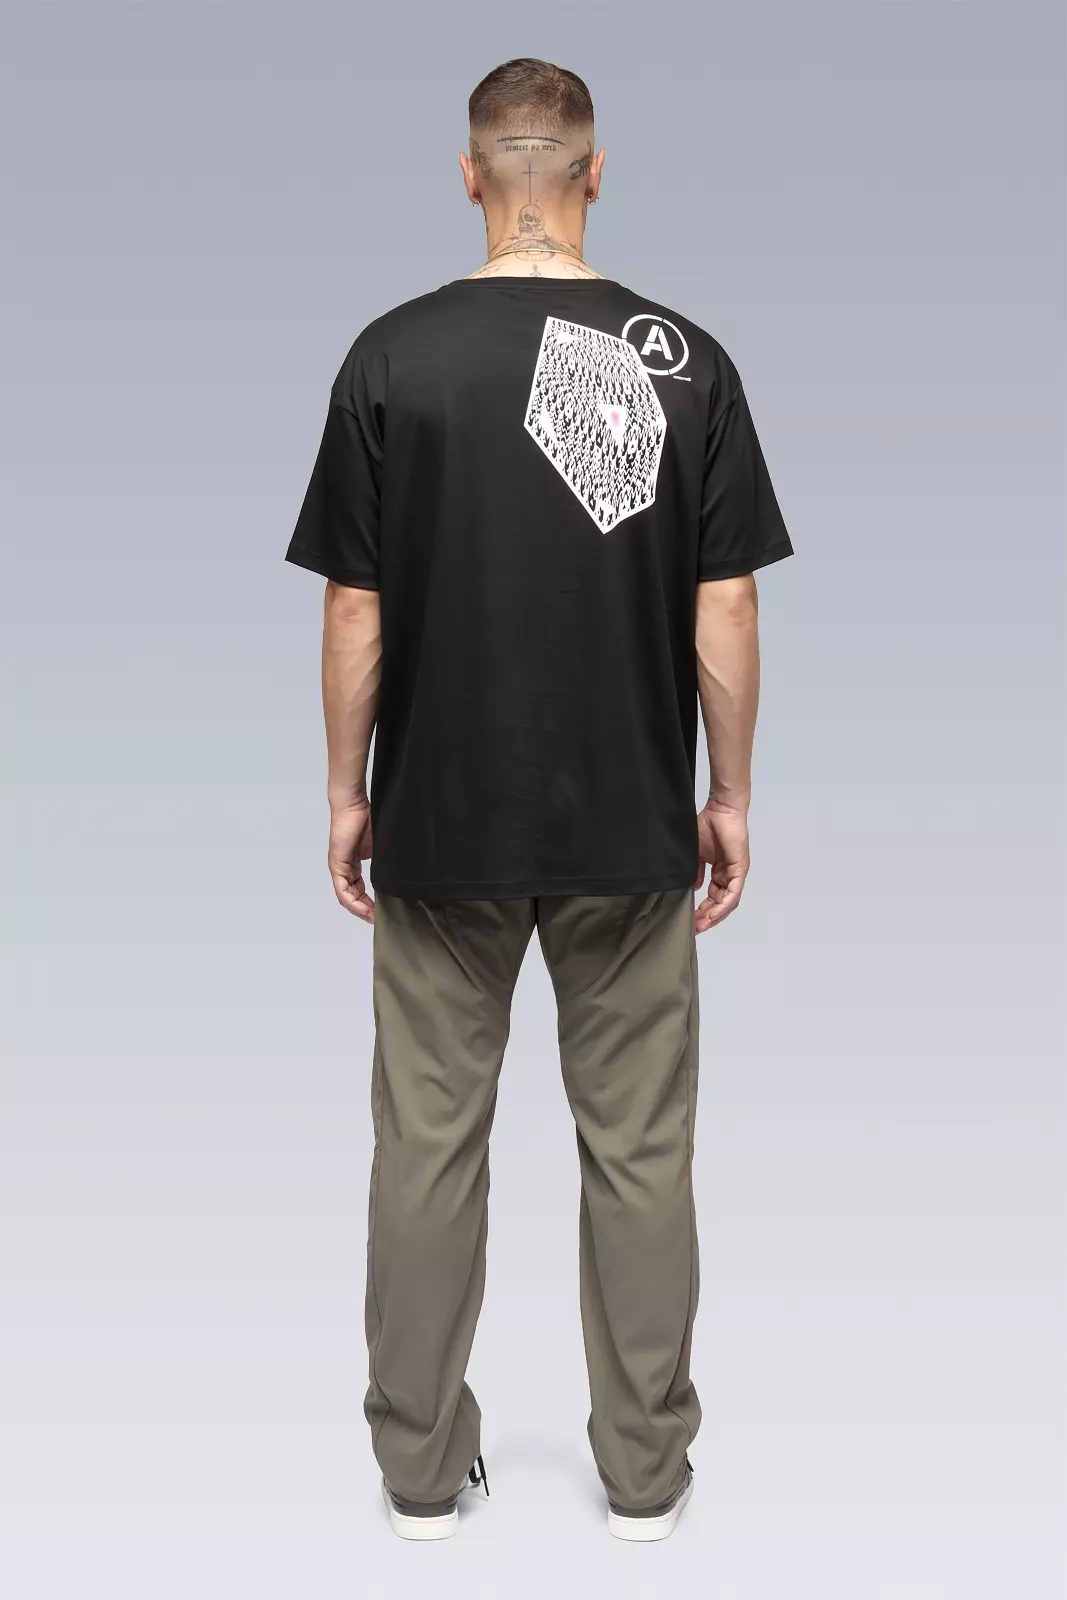 S24-PR-B 100% Cotton Mercerized Short Sleeve T-shirt Coyote - 13